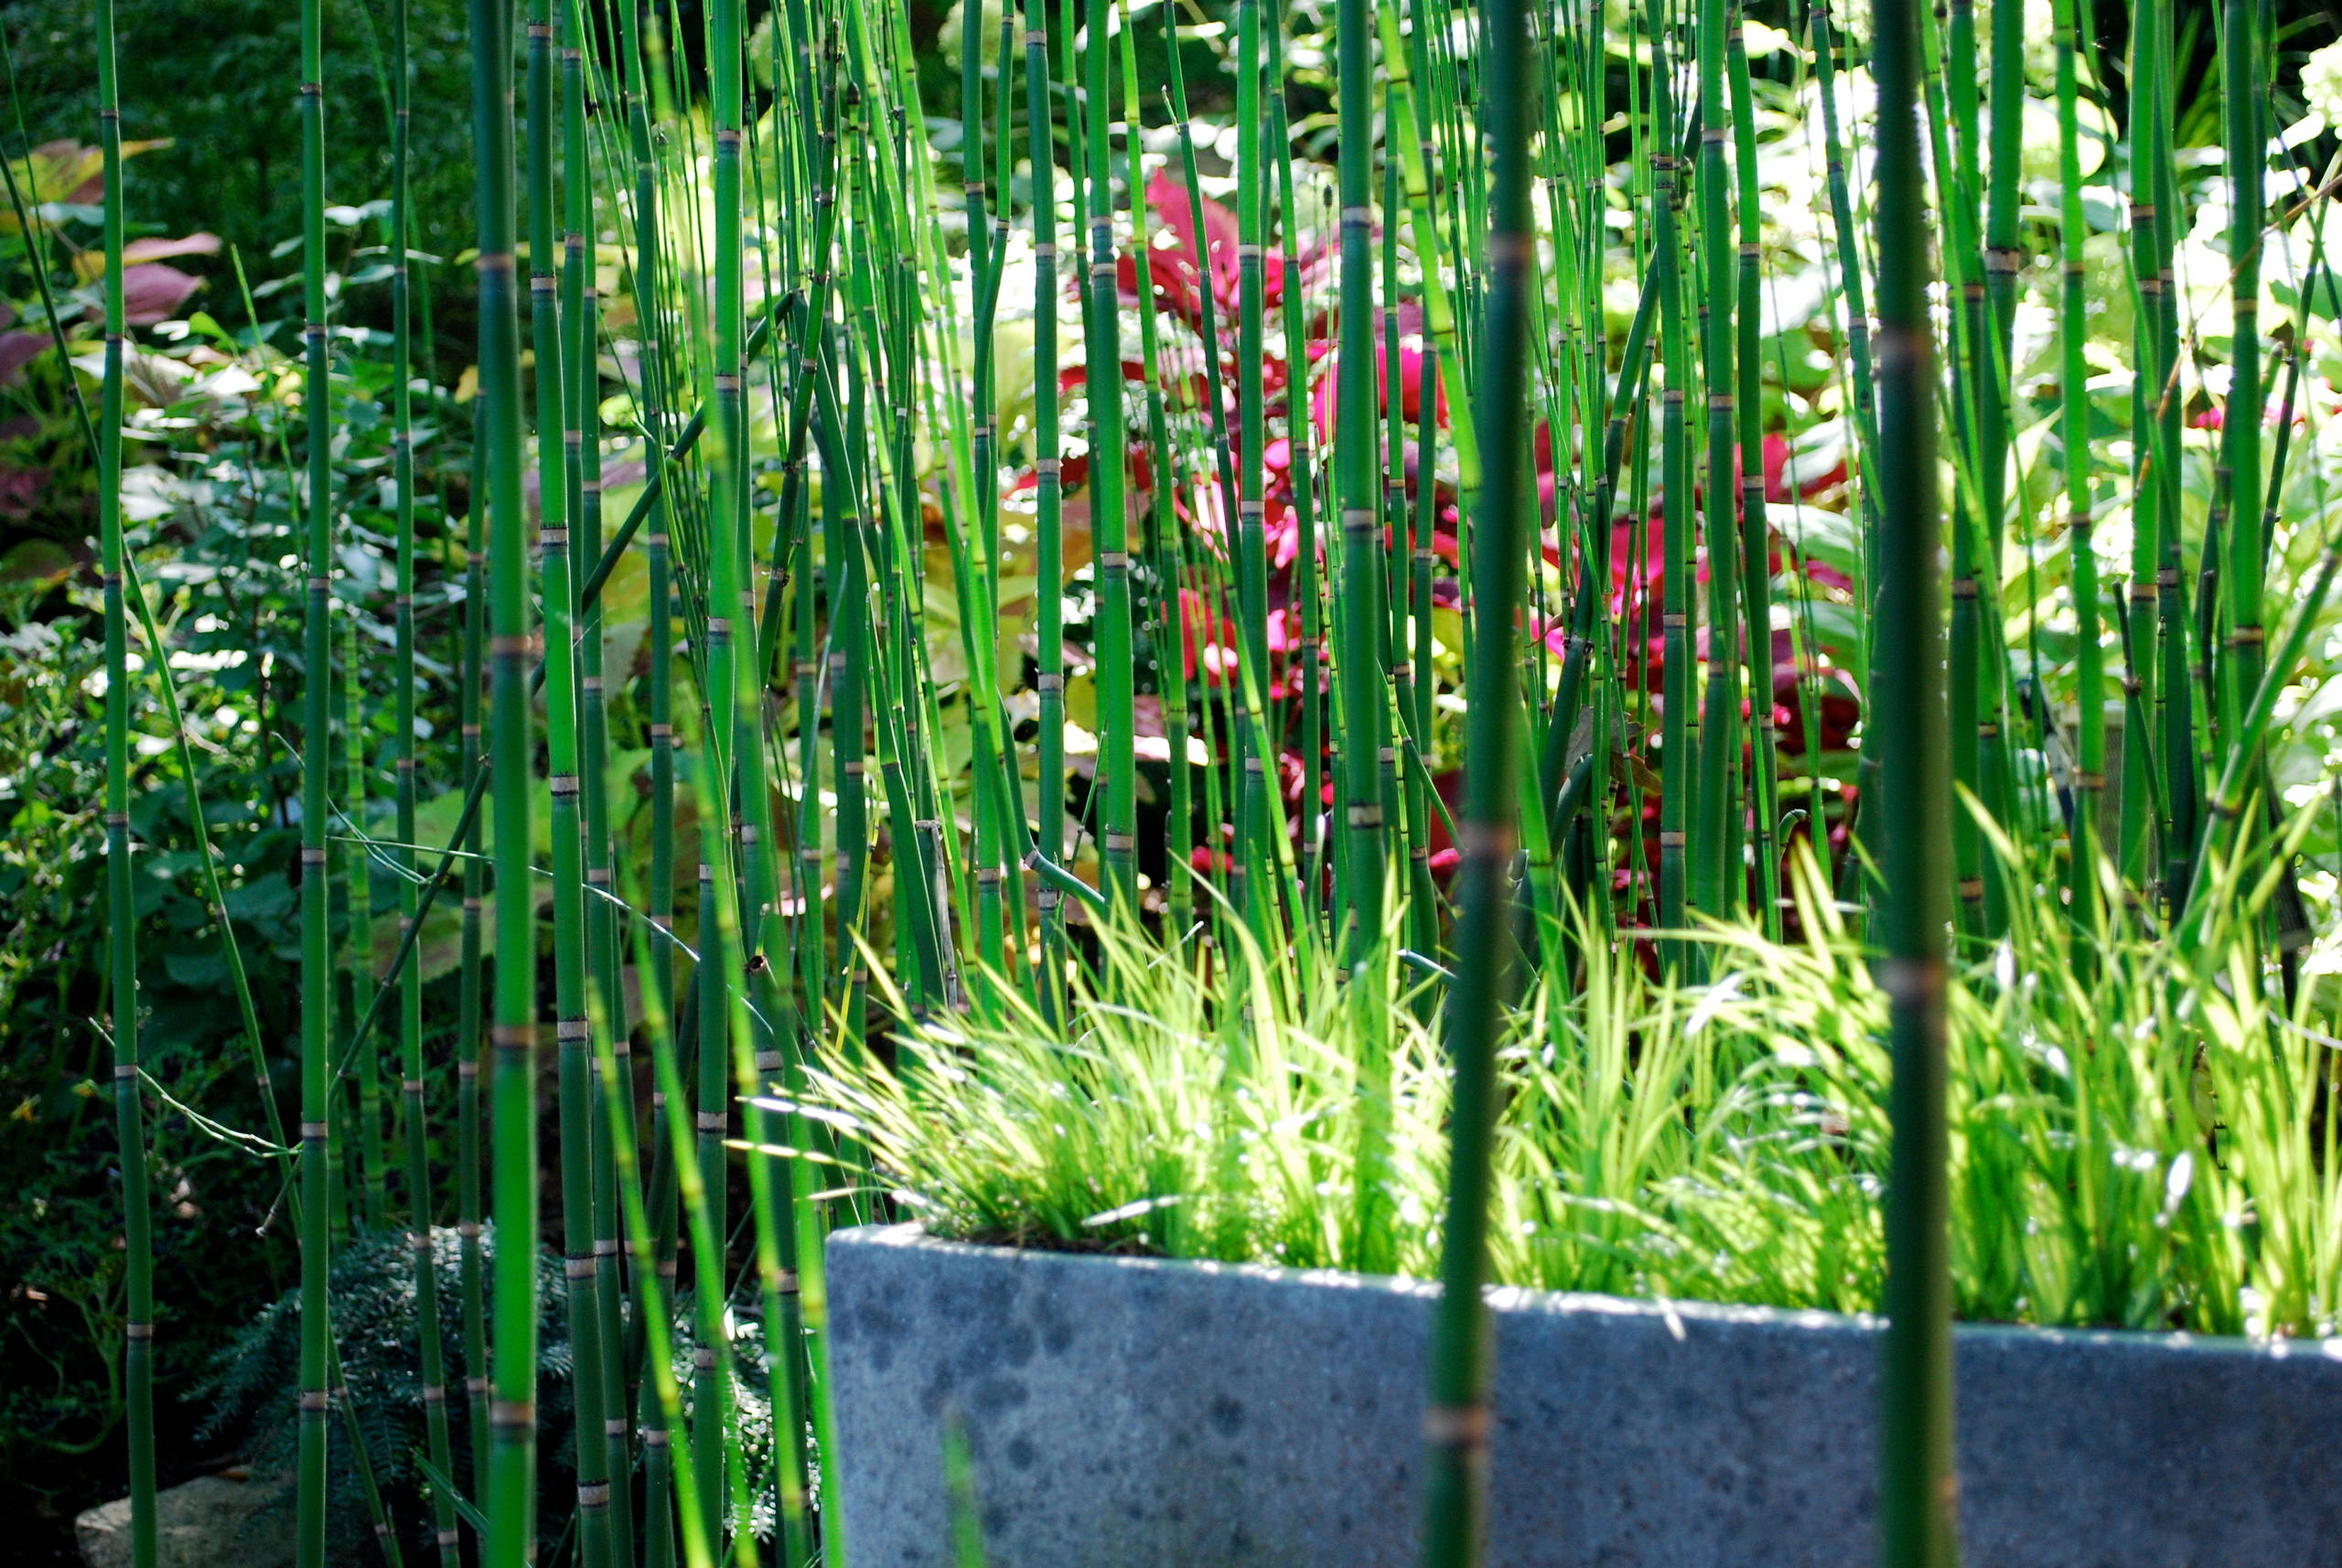 Zinc planter, horsetail rush and acorus, backlit.